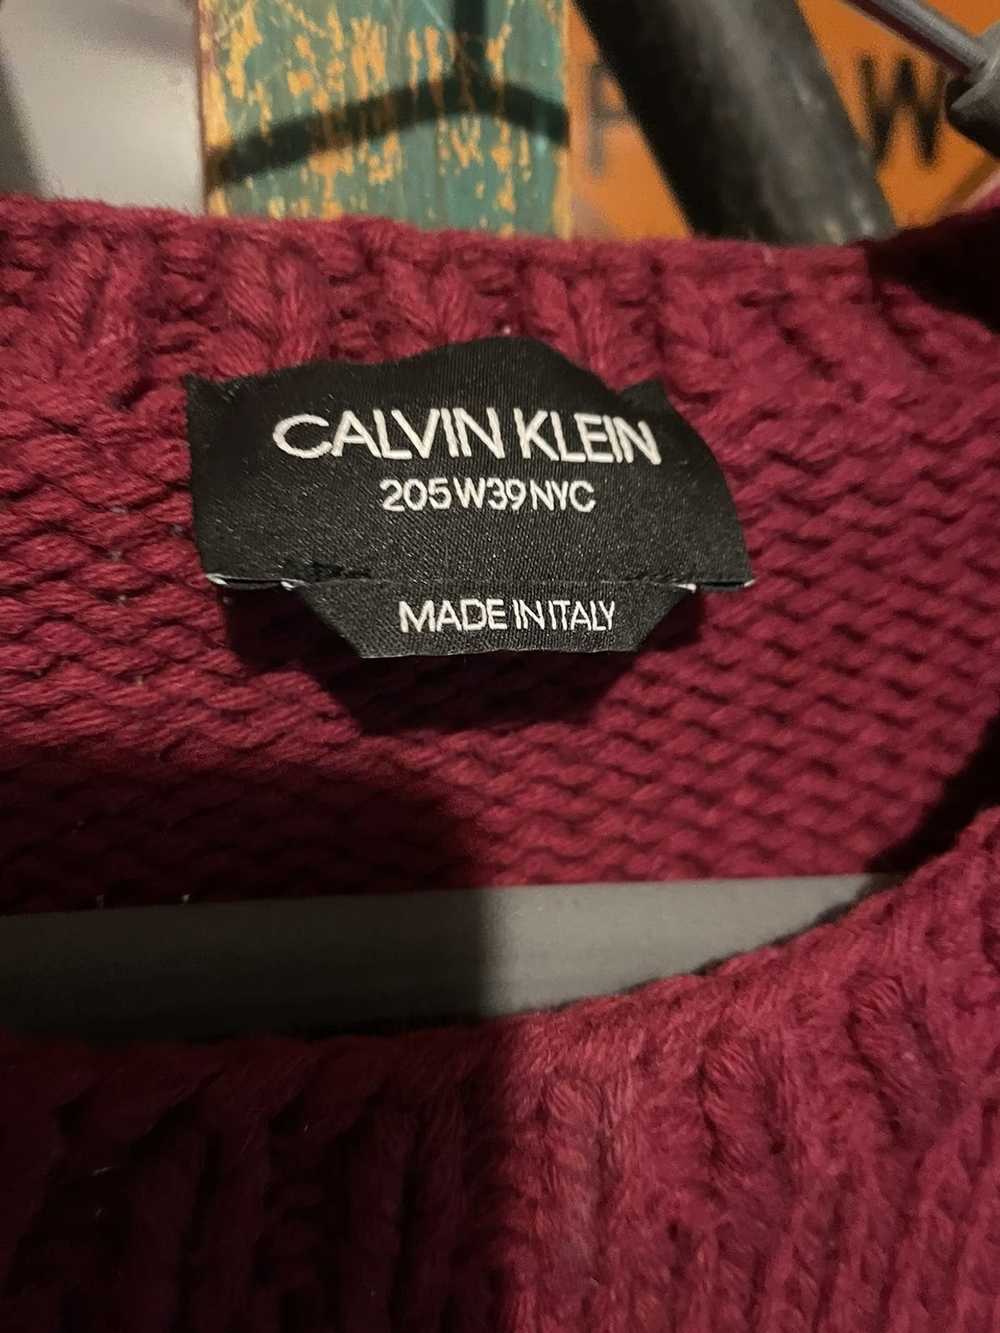 Calvin Klein 205W39NYC Ck205 knitwear sweater - image 4